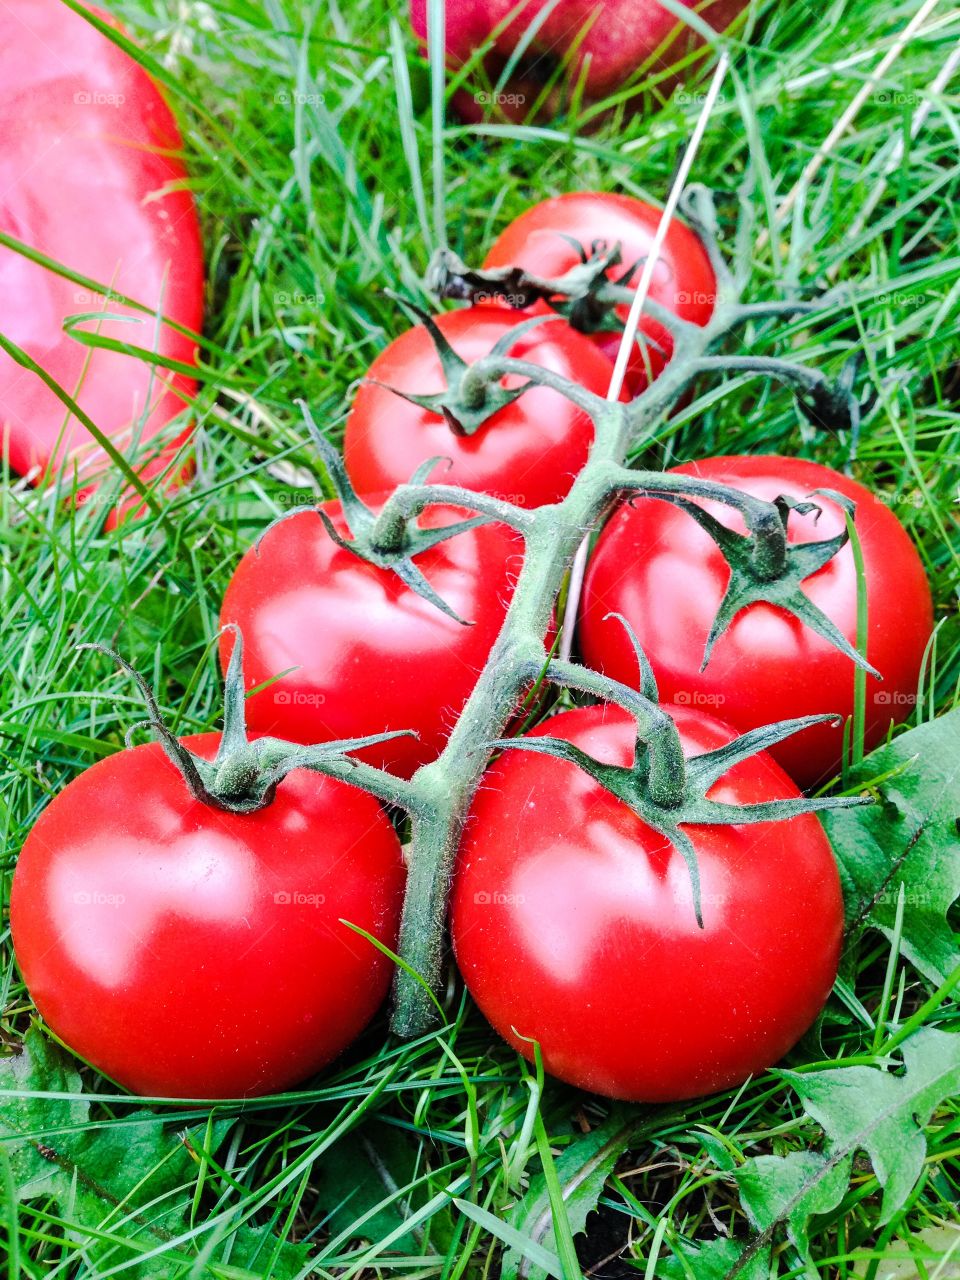 tomatoes tomatoes